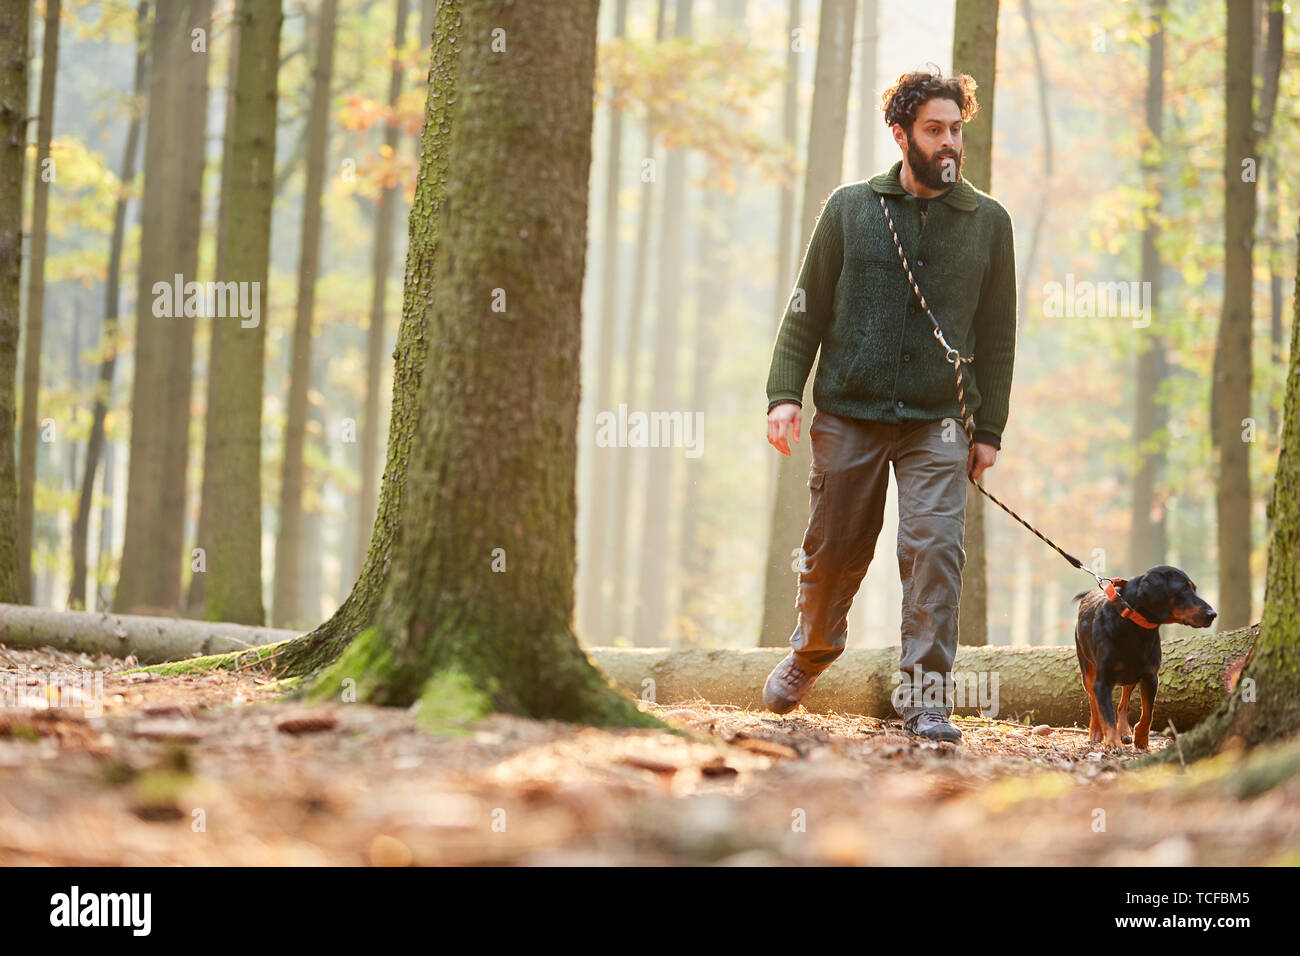 Silvicultores de cazadores o ir a dar un paseo en el bosque con un perro como un perro de caza Foto de stock